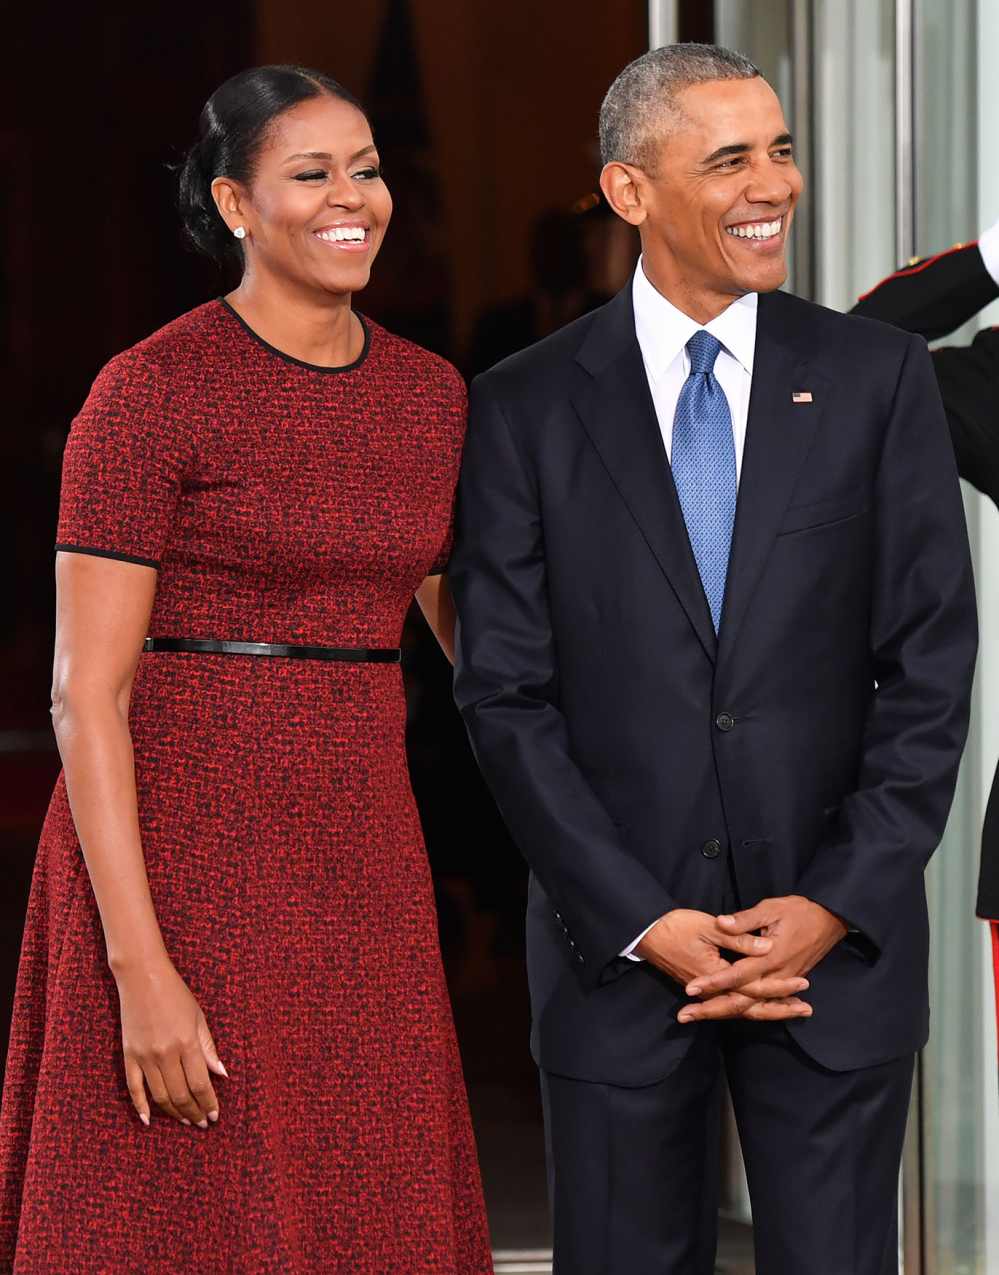 Michelle Obama Knit Husband Barack a Crewneck Sweater That ‘He Loves’